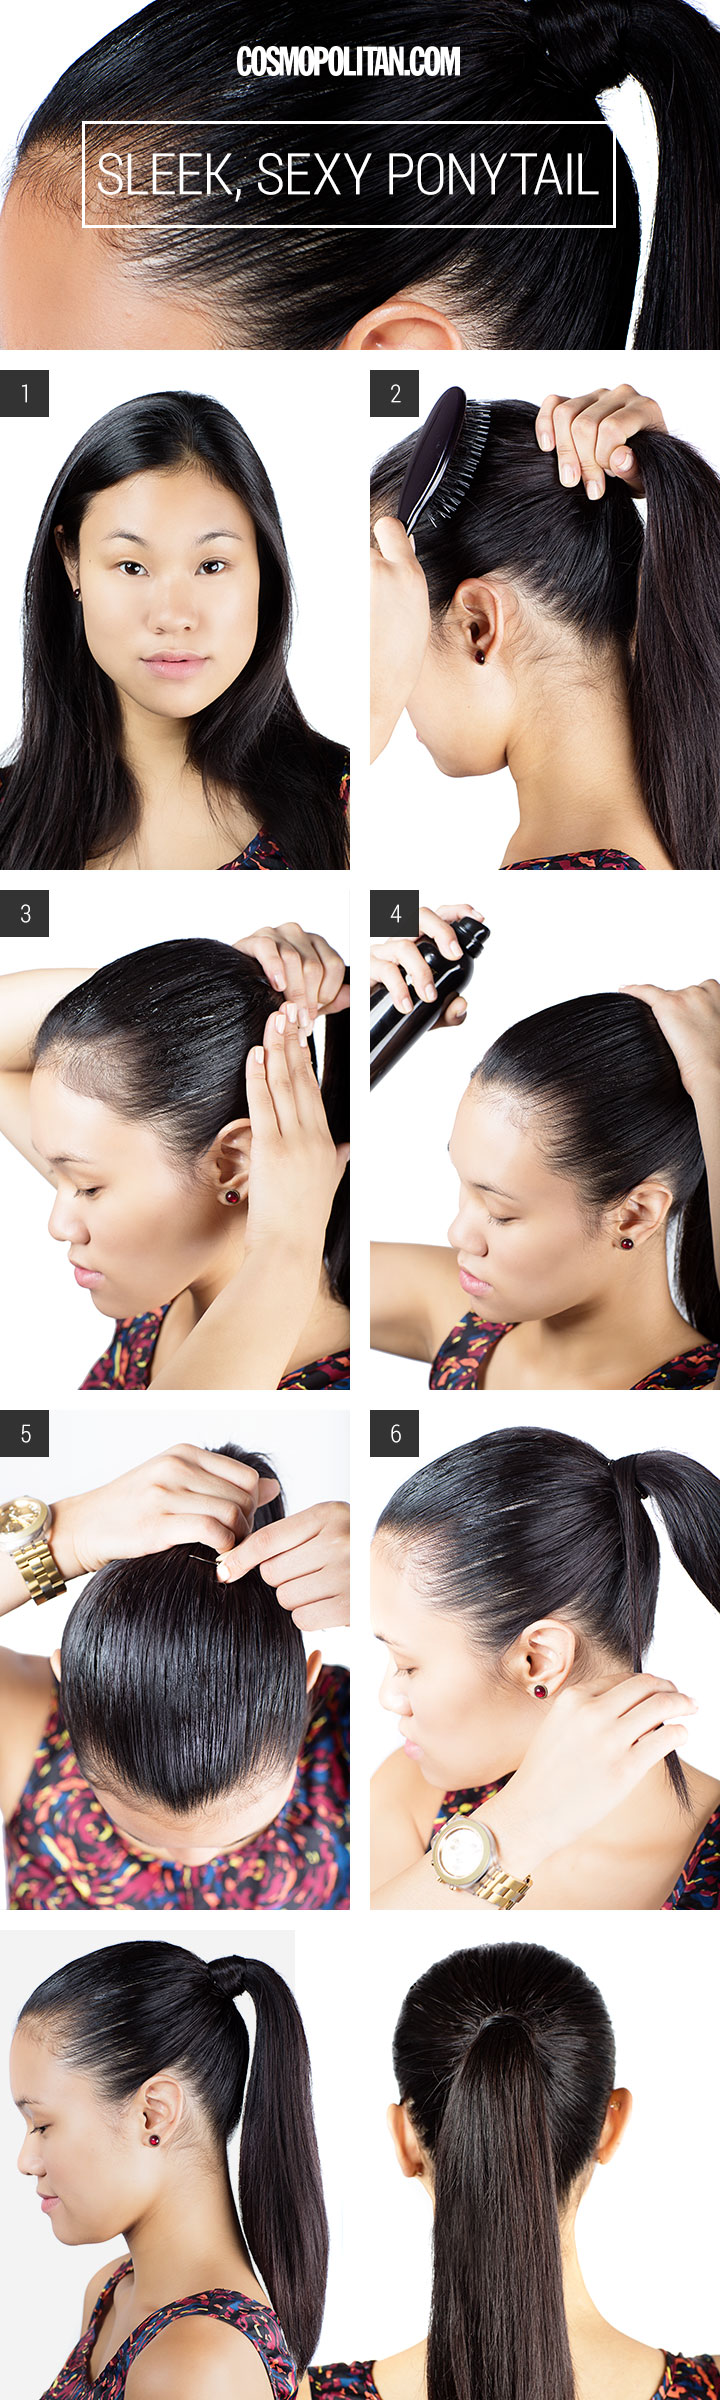 cosmo-infographic-ponytail